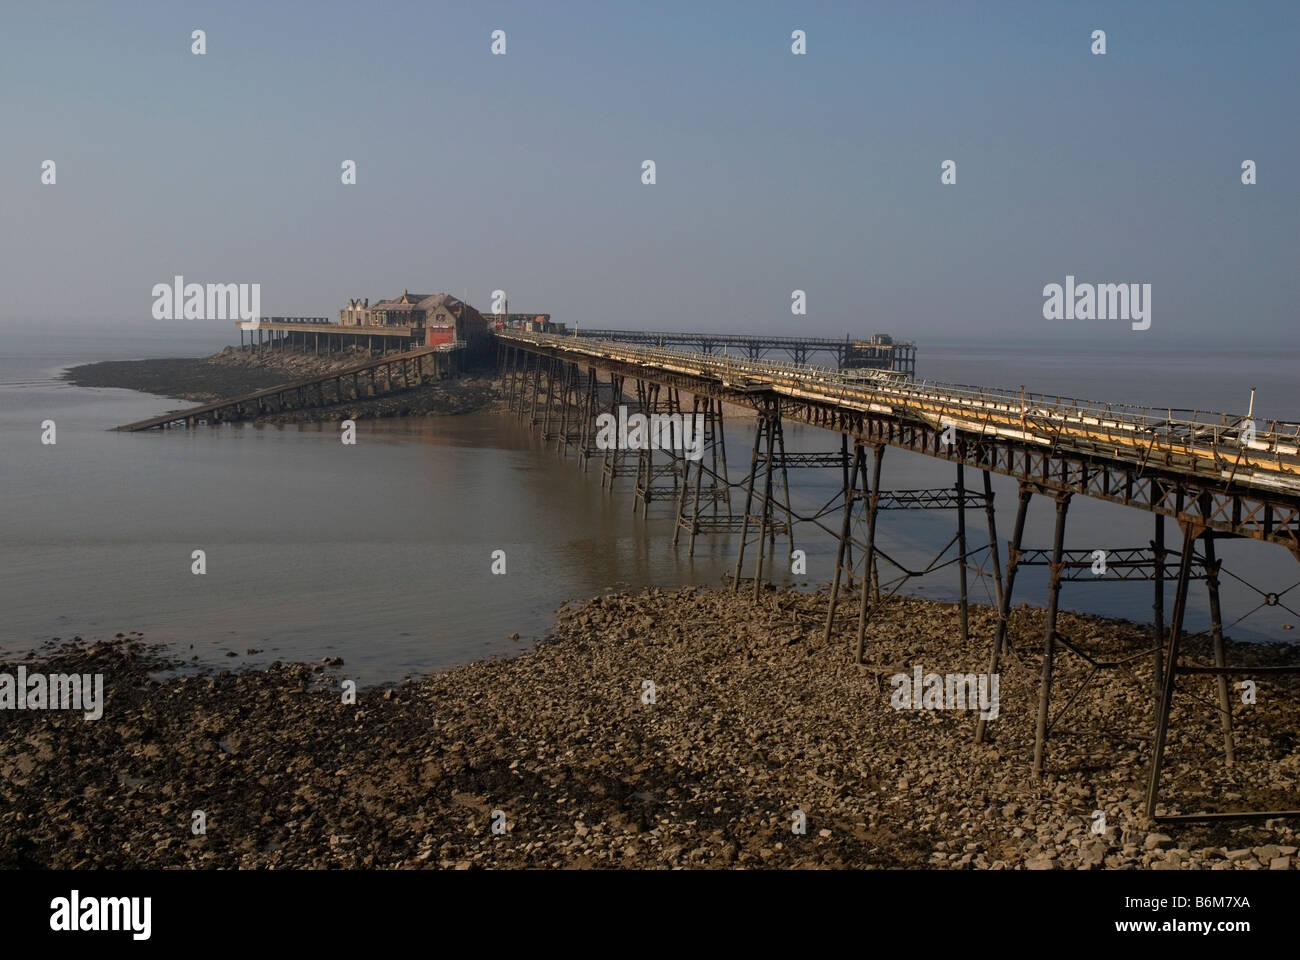 Birnbeck Pier, Weston-Super-Mare, Somerset, England. Stock Photo